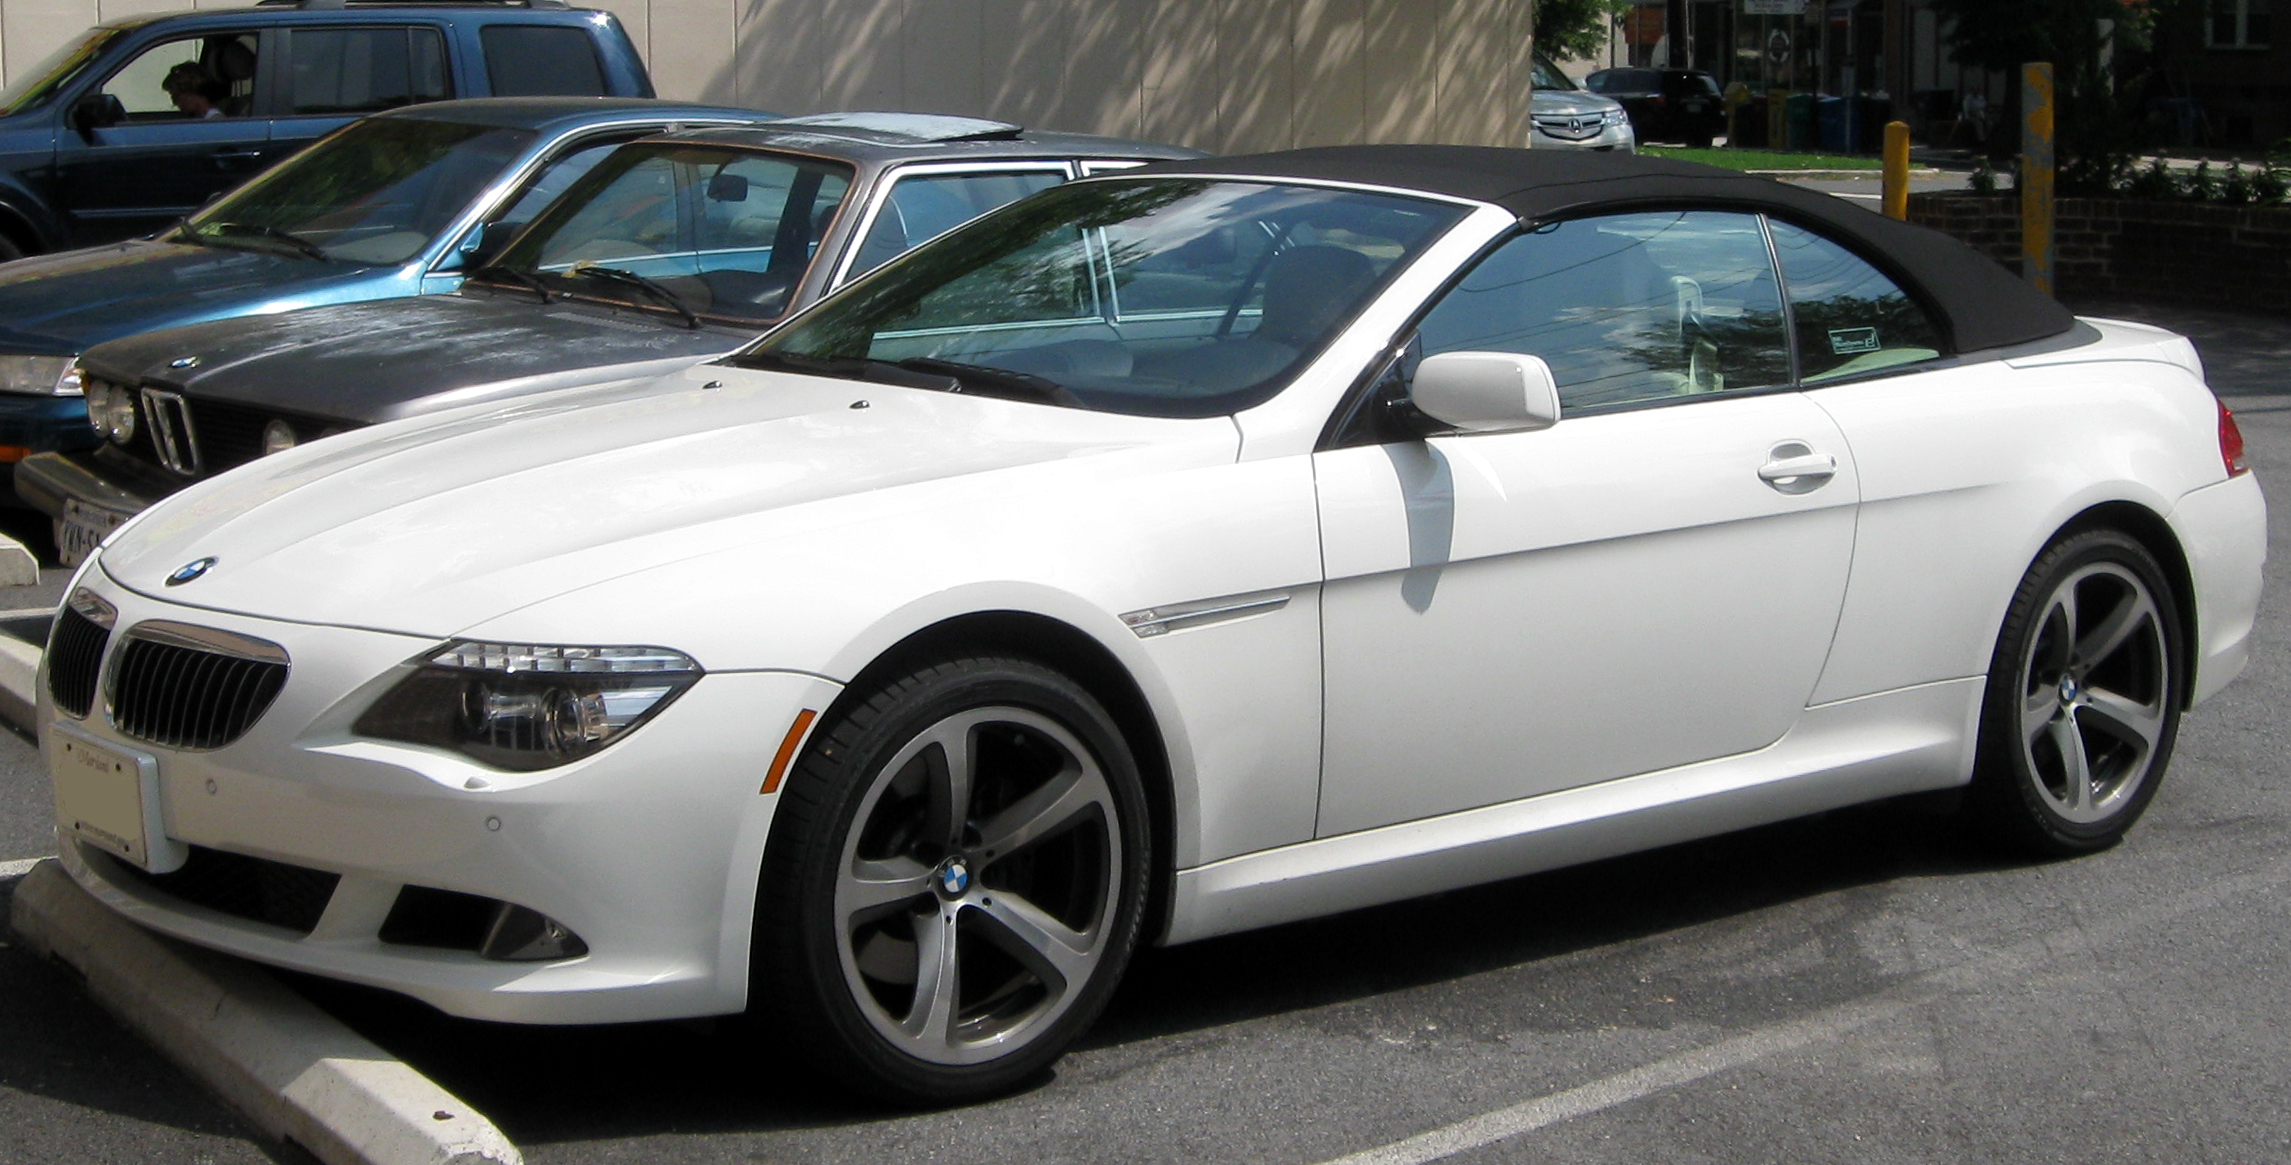 File:BMW 650Ci convertible -- 06-28-2011.jpg - Wikimedia Commons